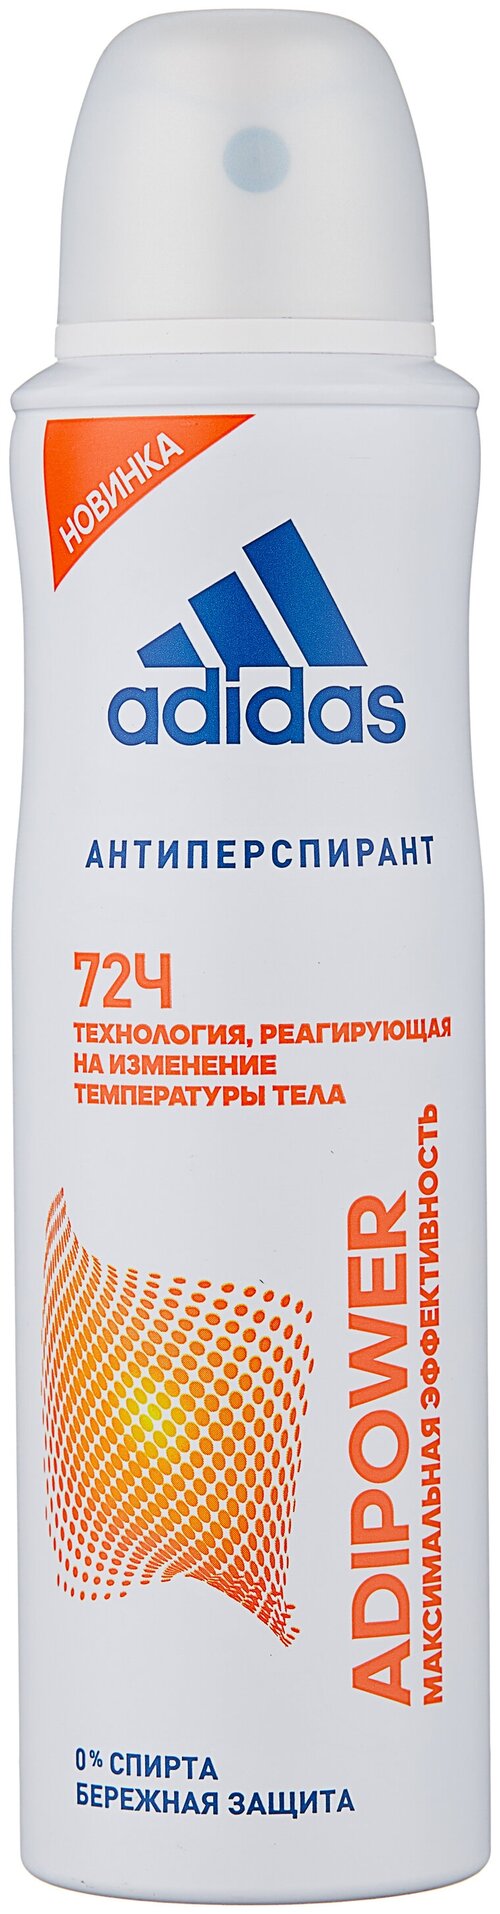 Adidas Антиперспирант Adipower максимальная эффективность, спрей, 150 мл